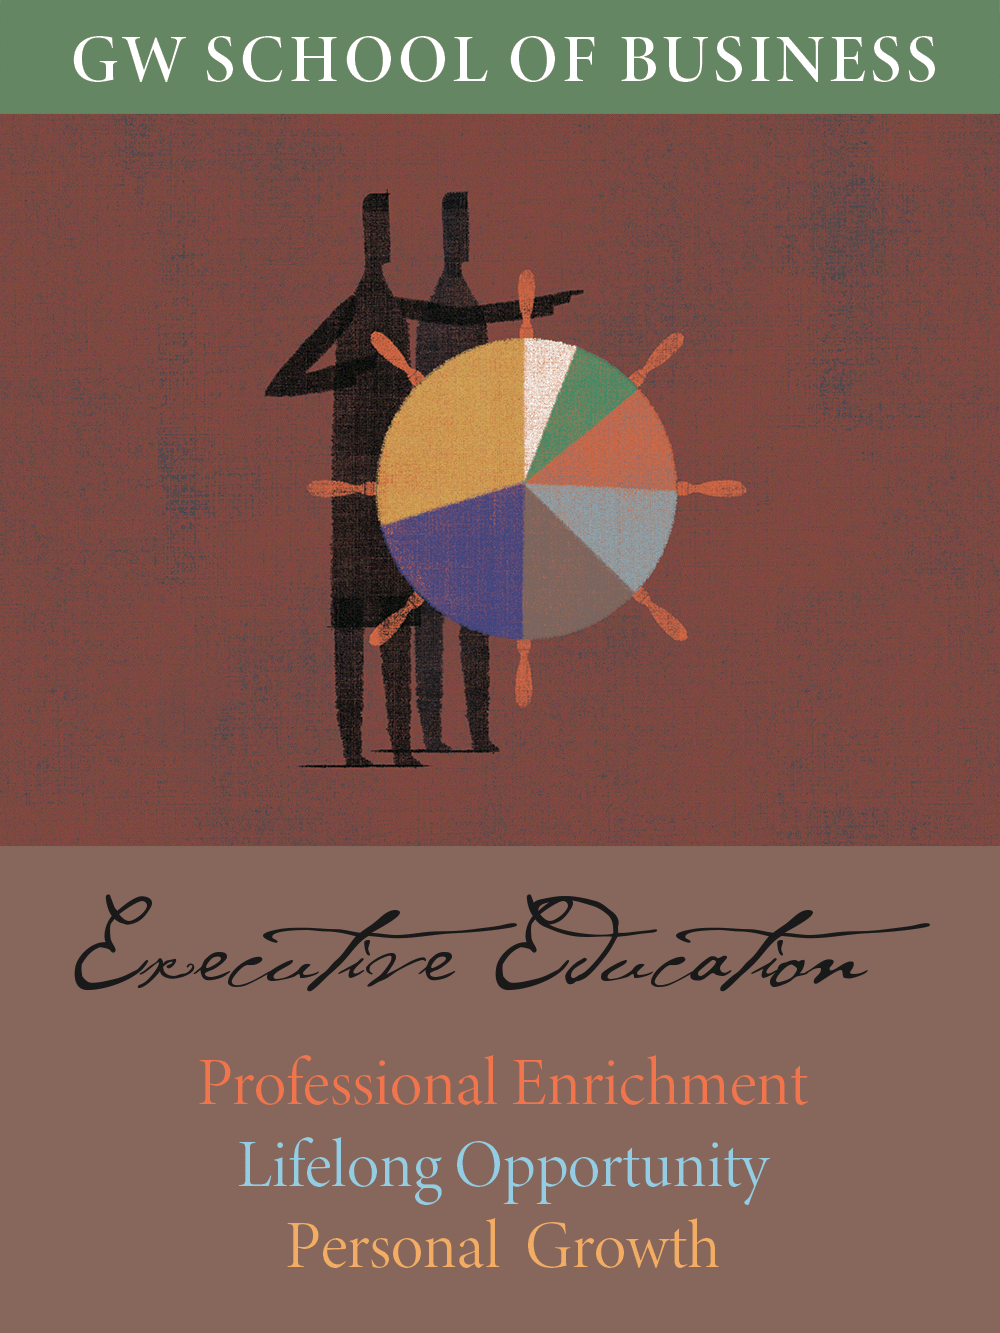 GWSB Executive Education Cover